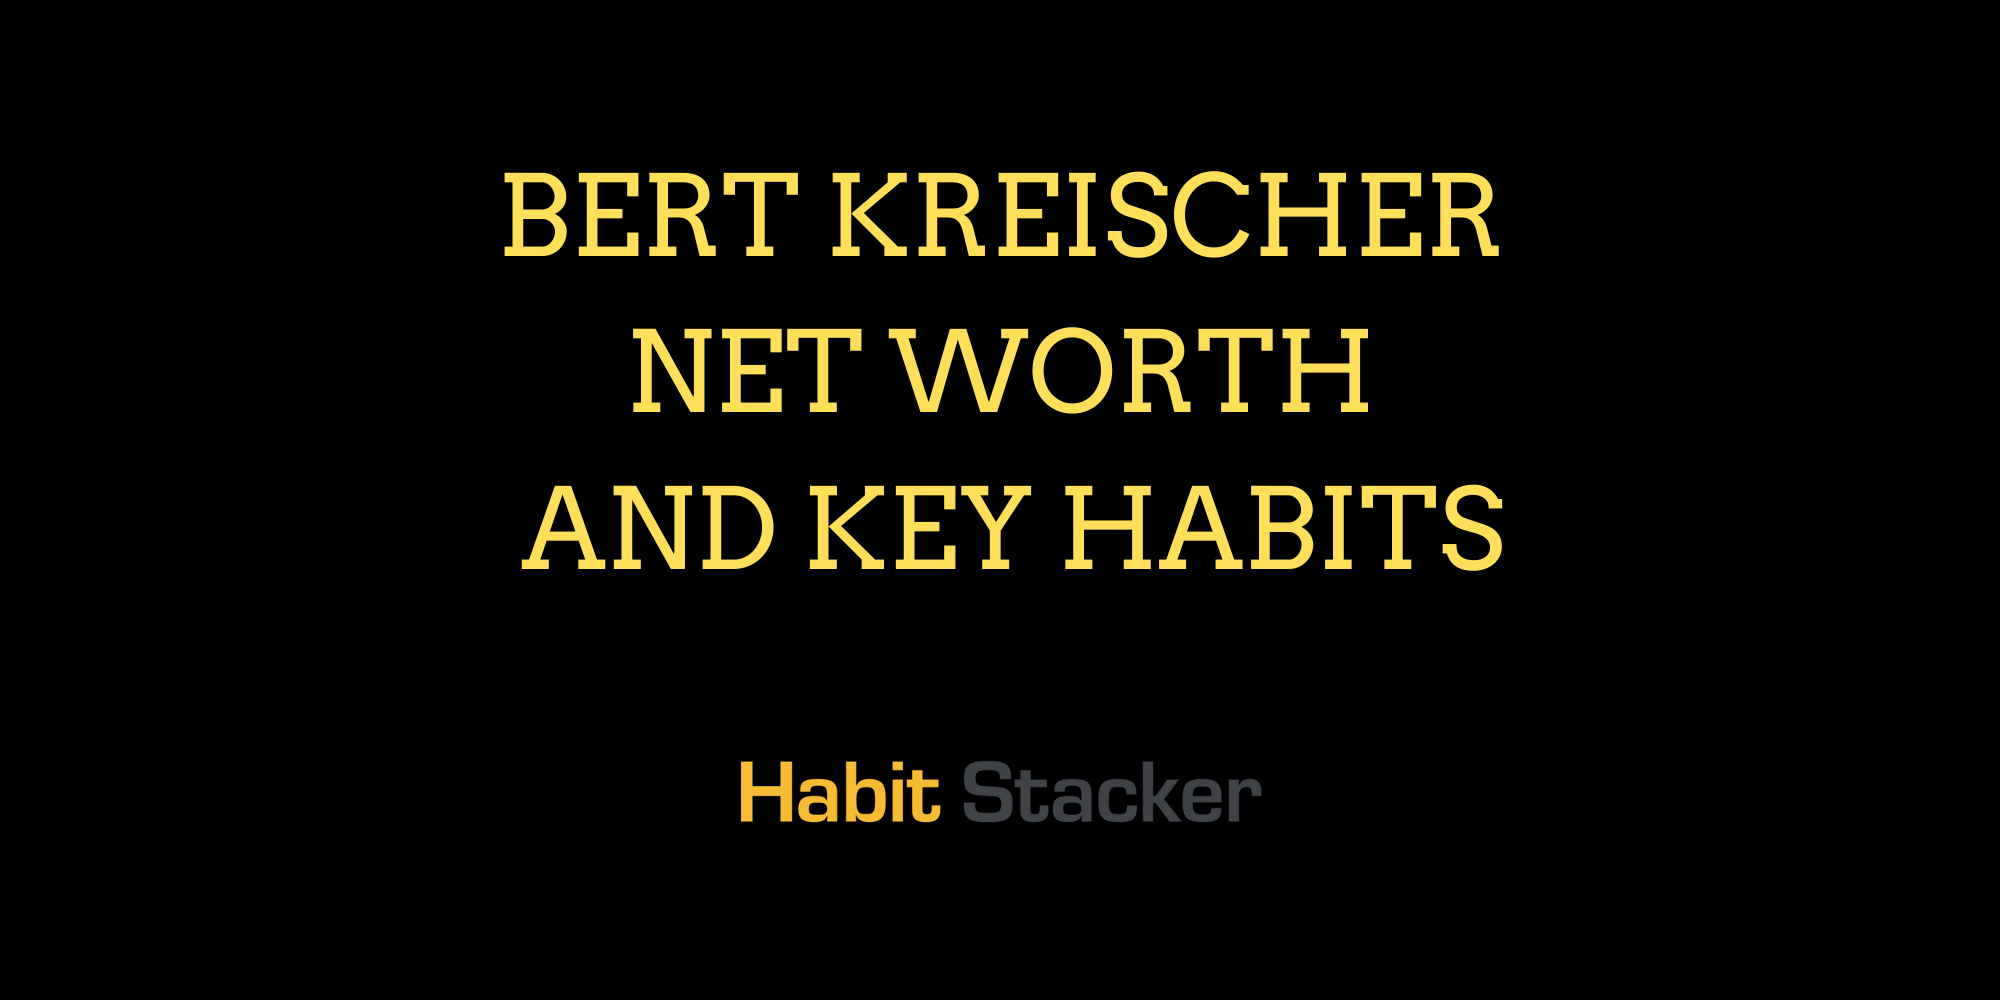 Bert Kreischer Net Worth And Key Habits